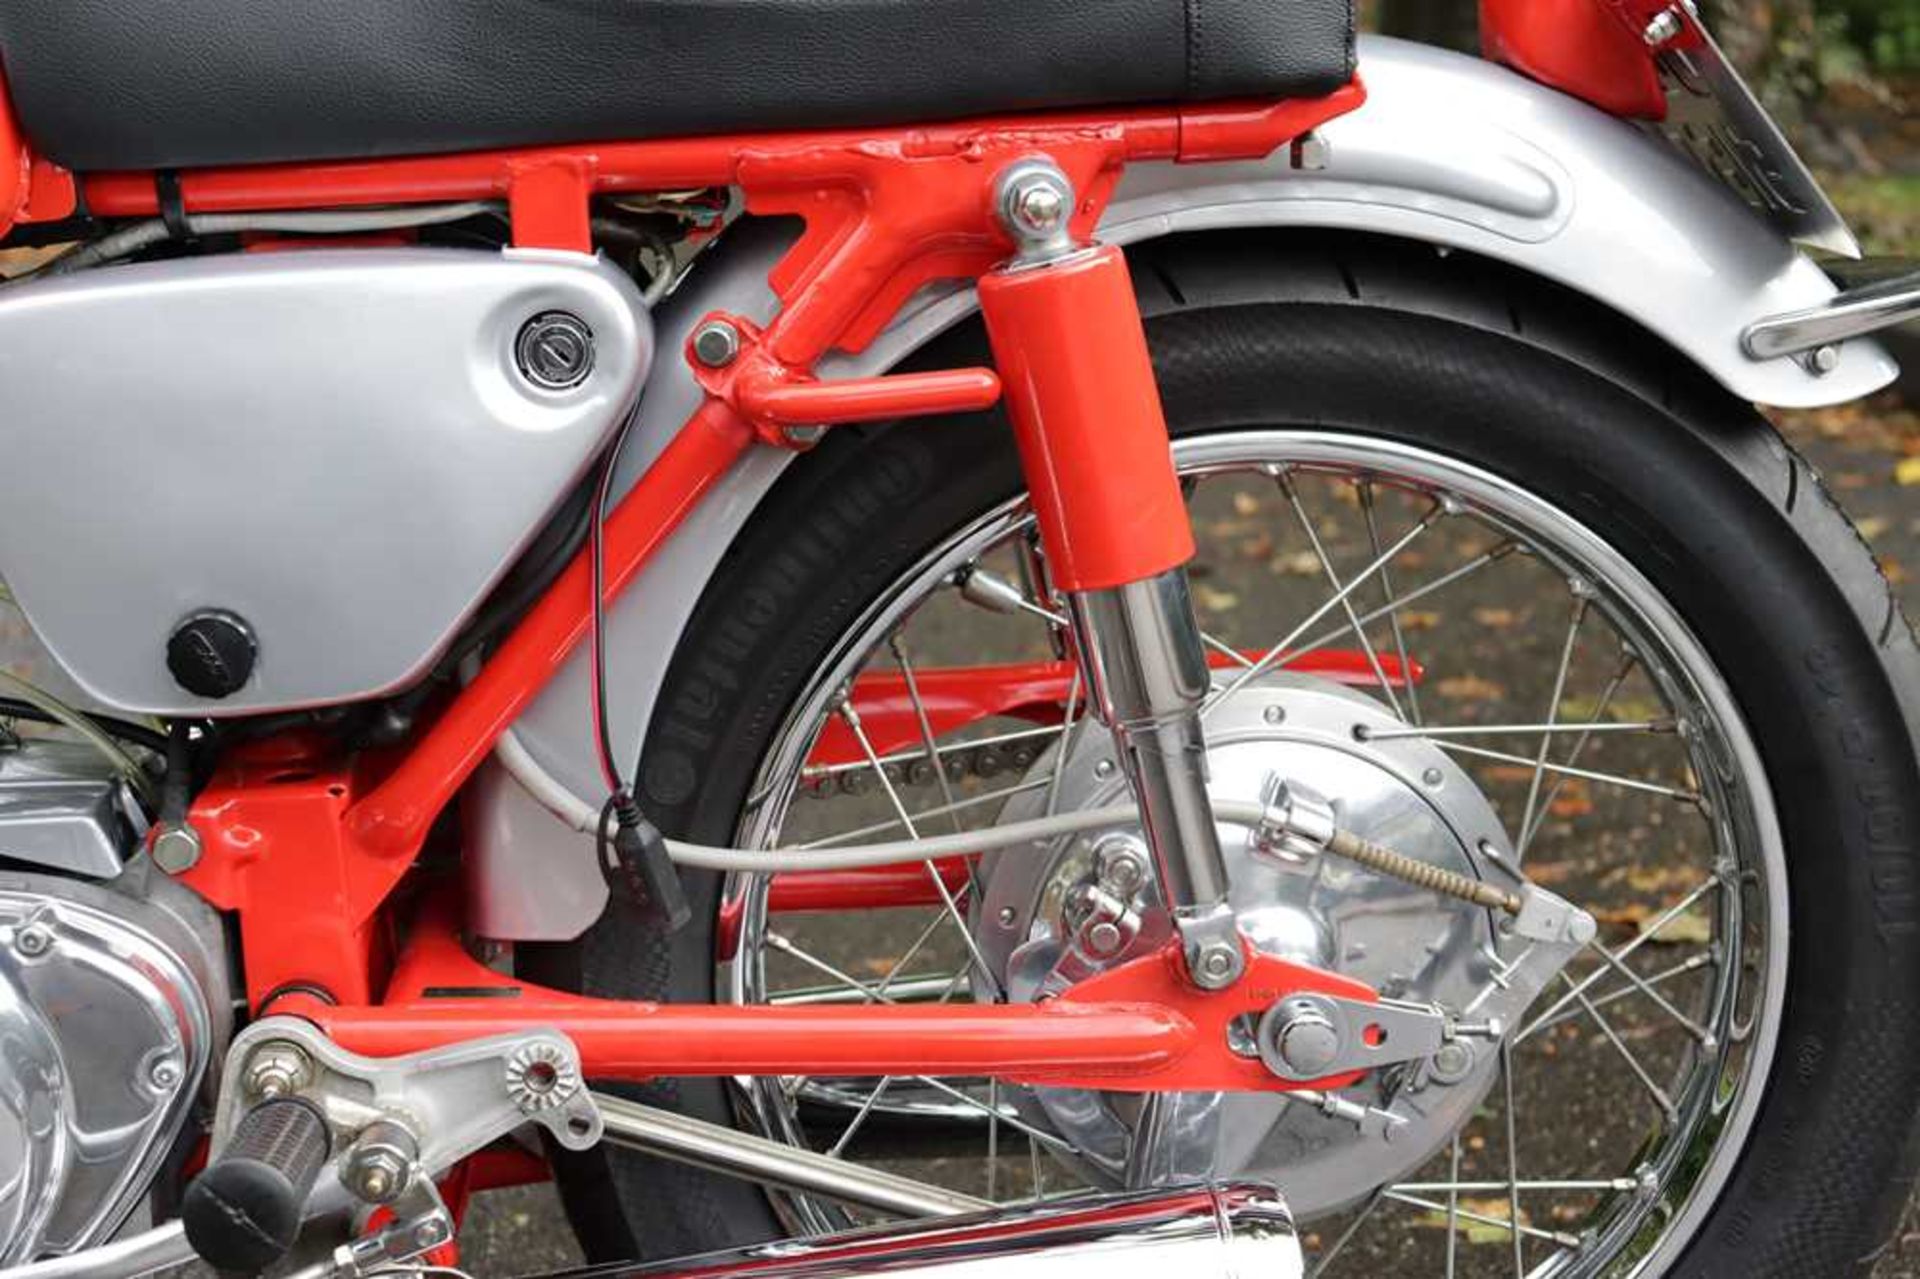 1966 Honda CB77 Restored to a high standard - Image 54 of 65